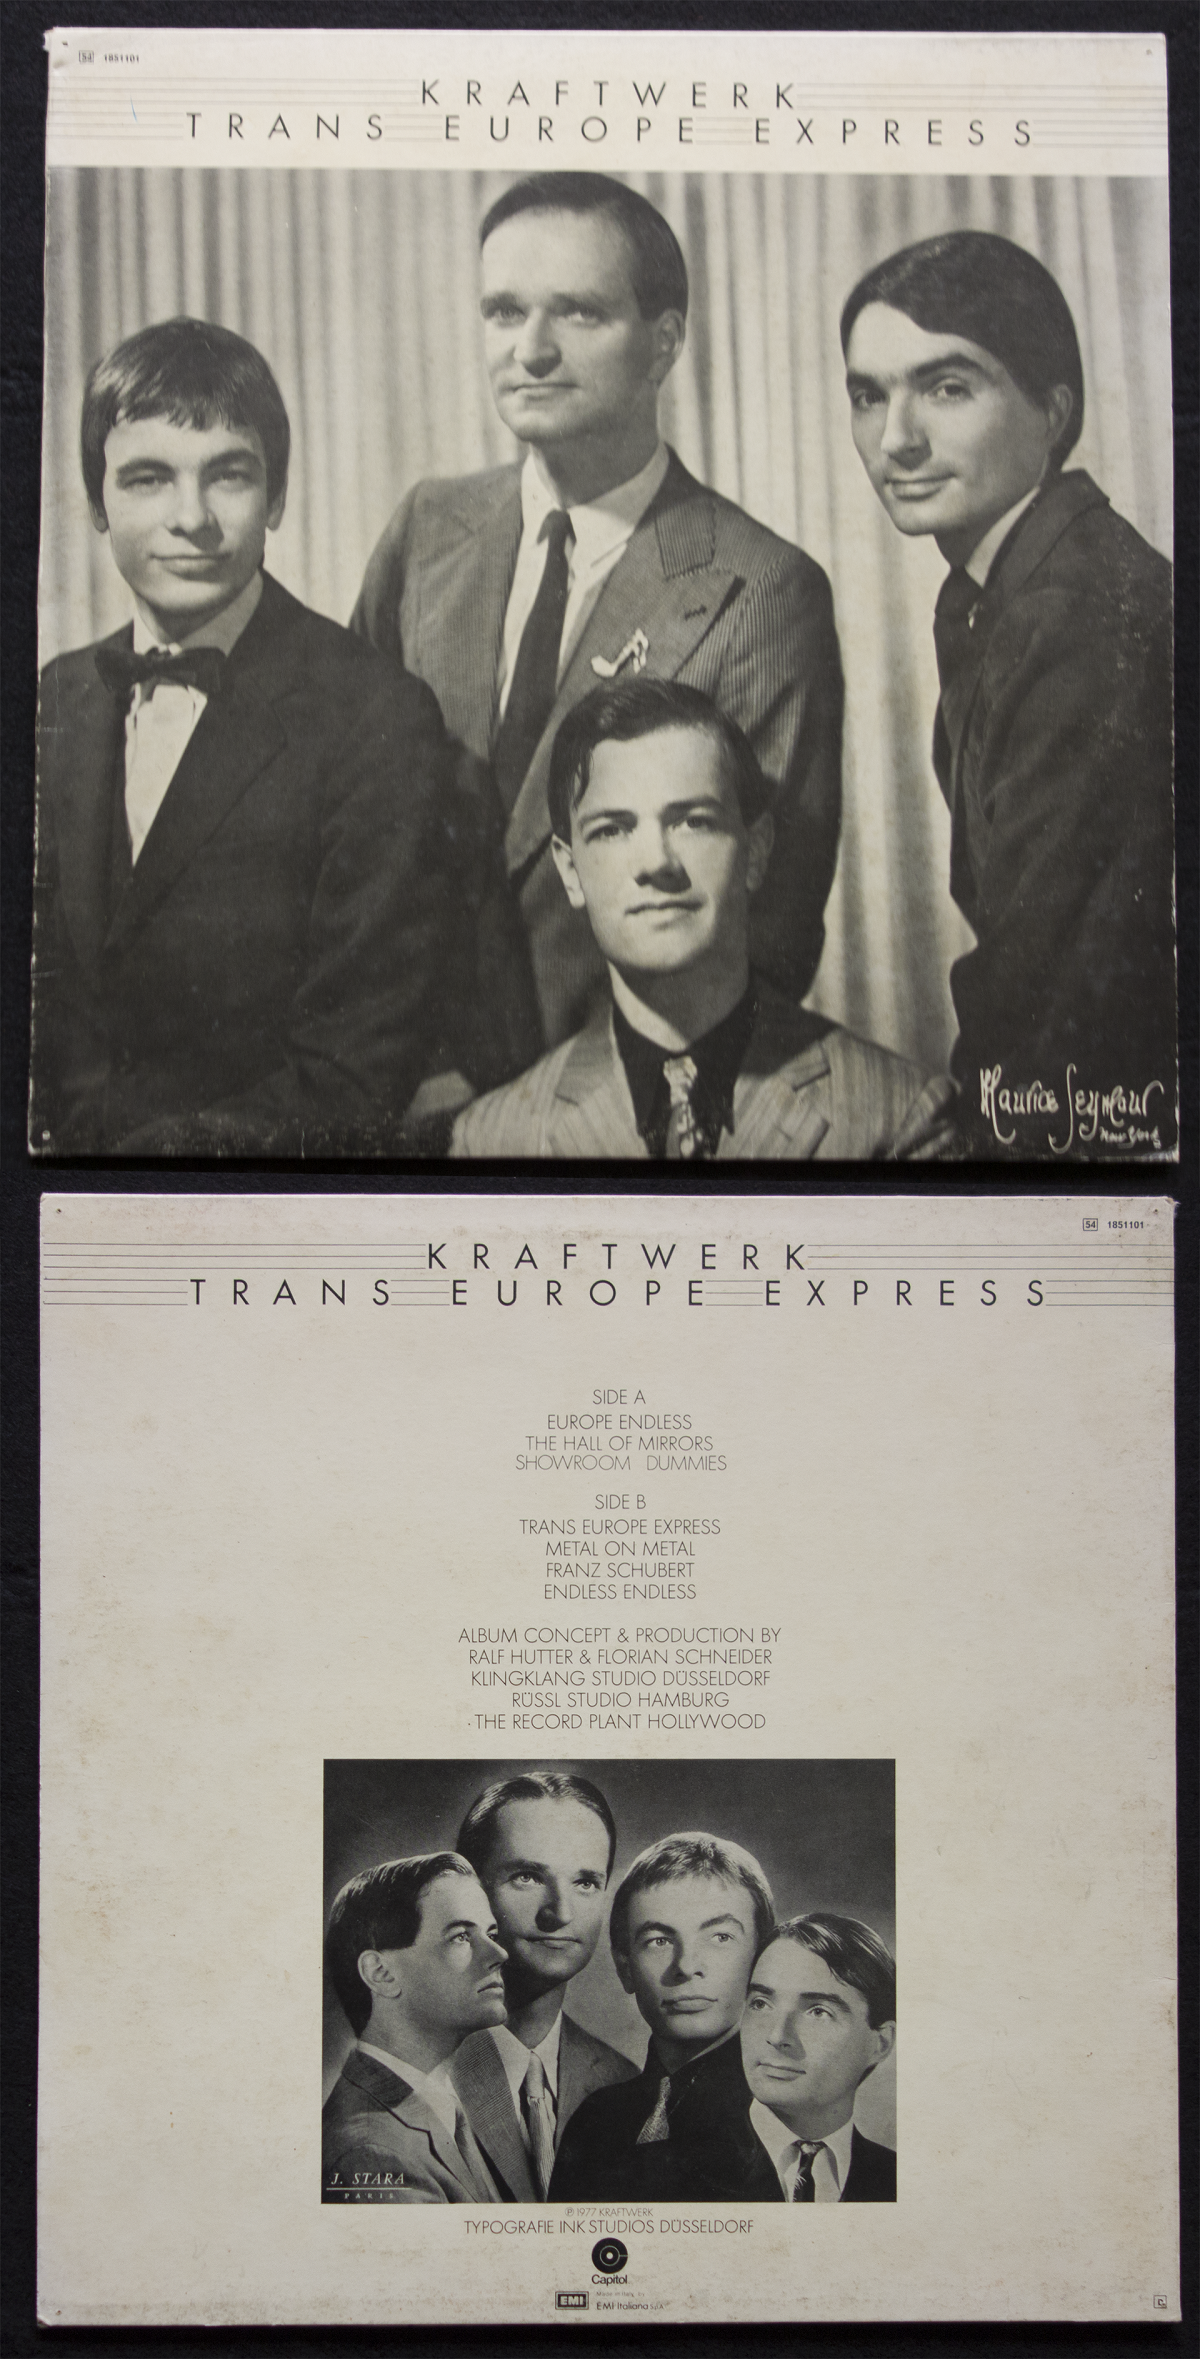 Kraftwerk_Trans Europe Express LP 1977 Italian.png